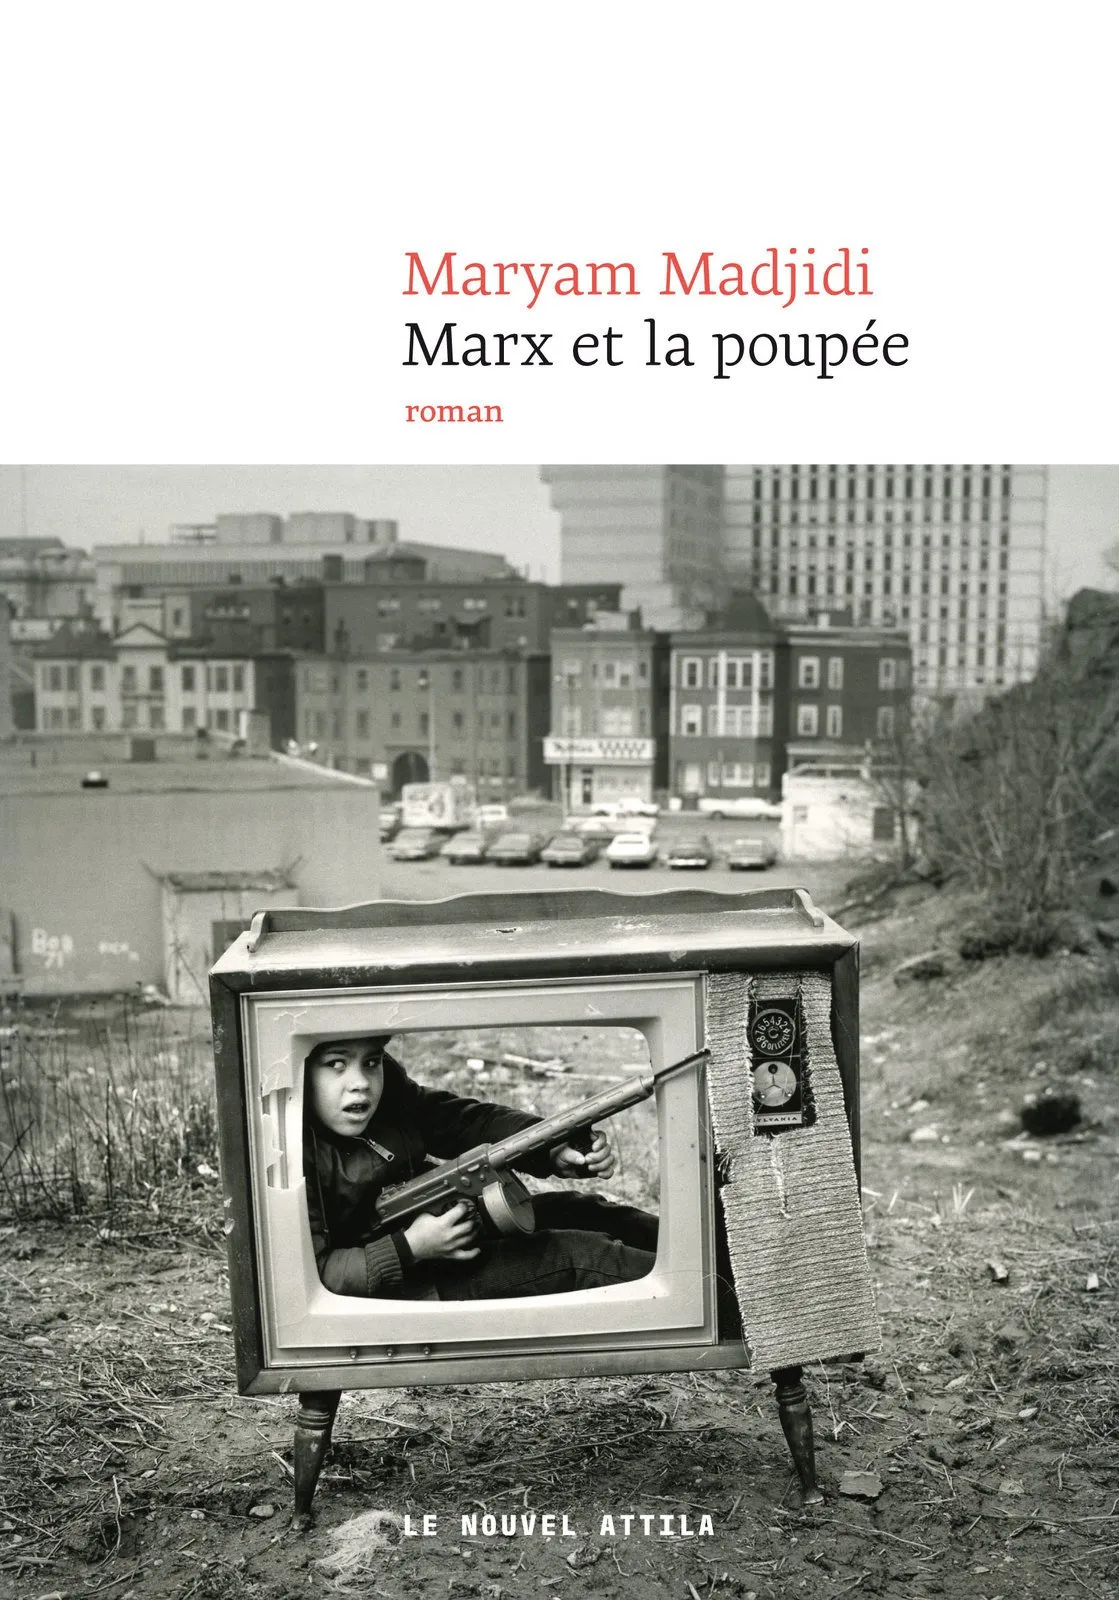 Maryam Madjidi, Marx et la poupée, 2017